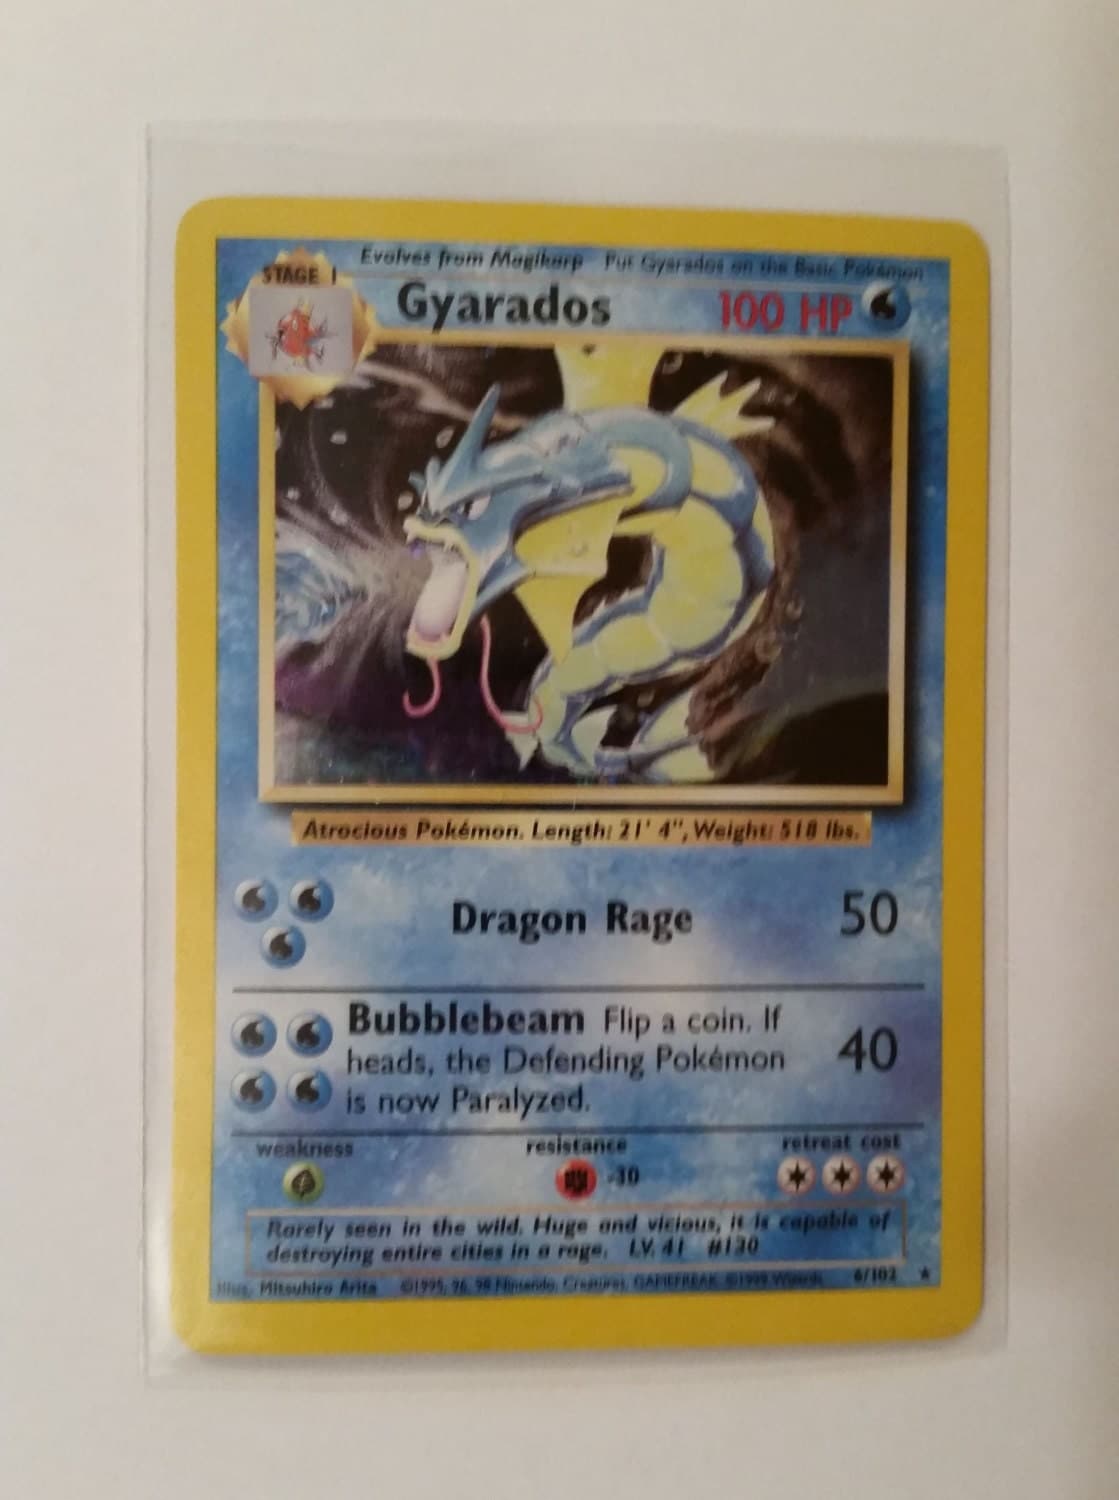 Gyarados Holographic Pokemon Card For Crafting or Display